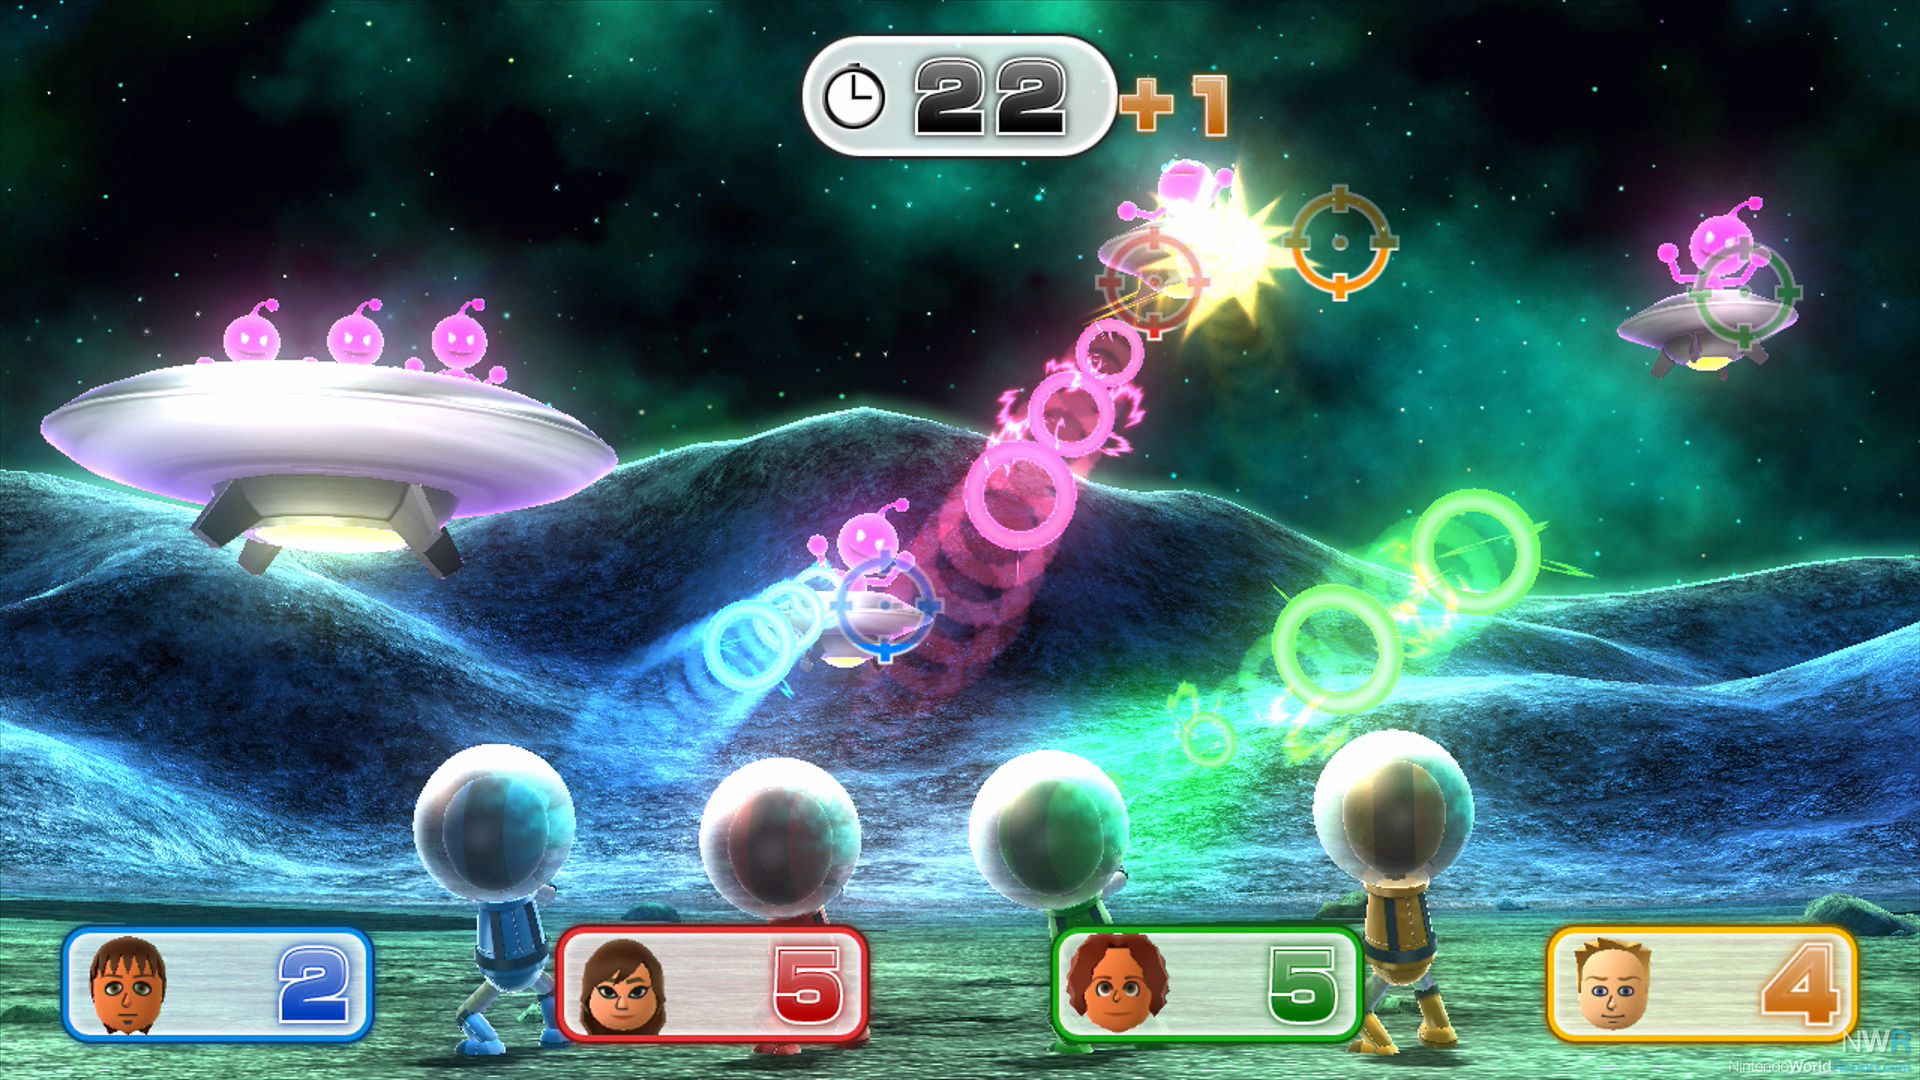 Wii Party U - Game - Nintendo World Report